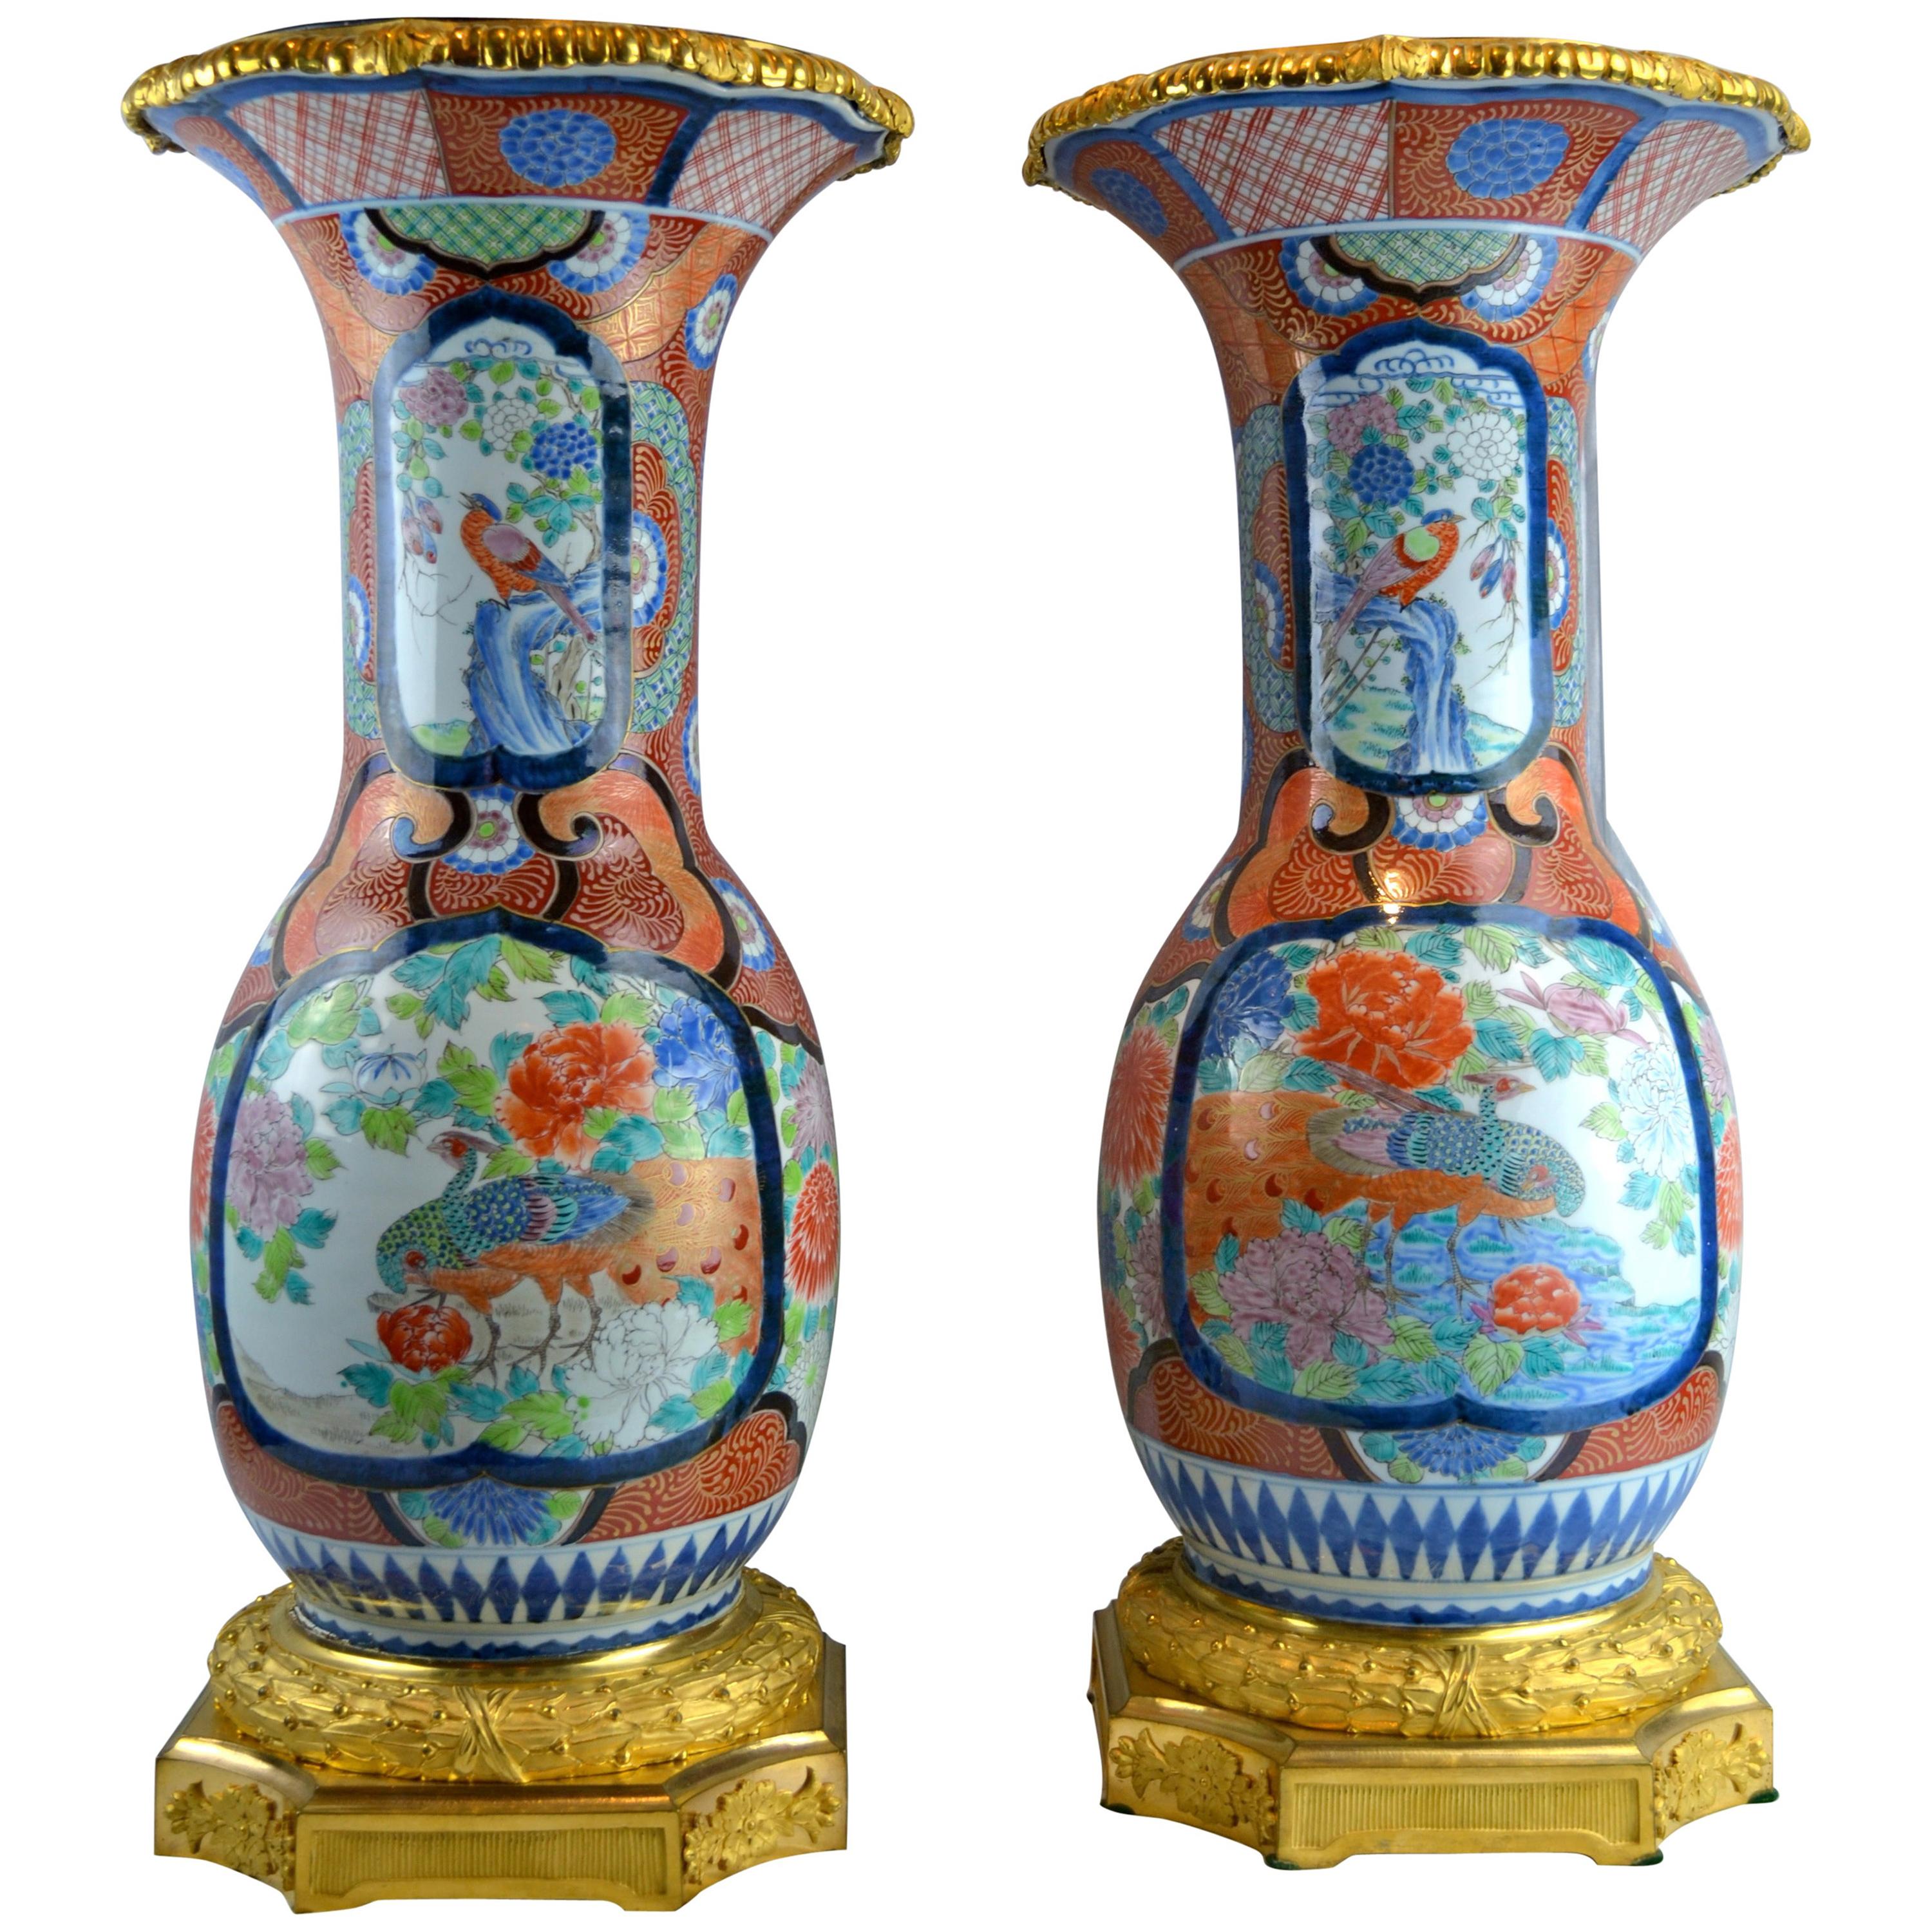 Palatial 19th Century Japanese Imari Vases with French Gilt Bronze Mounts, Pair